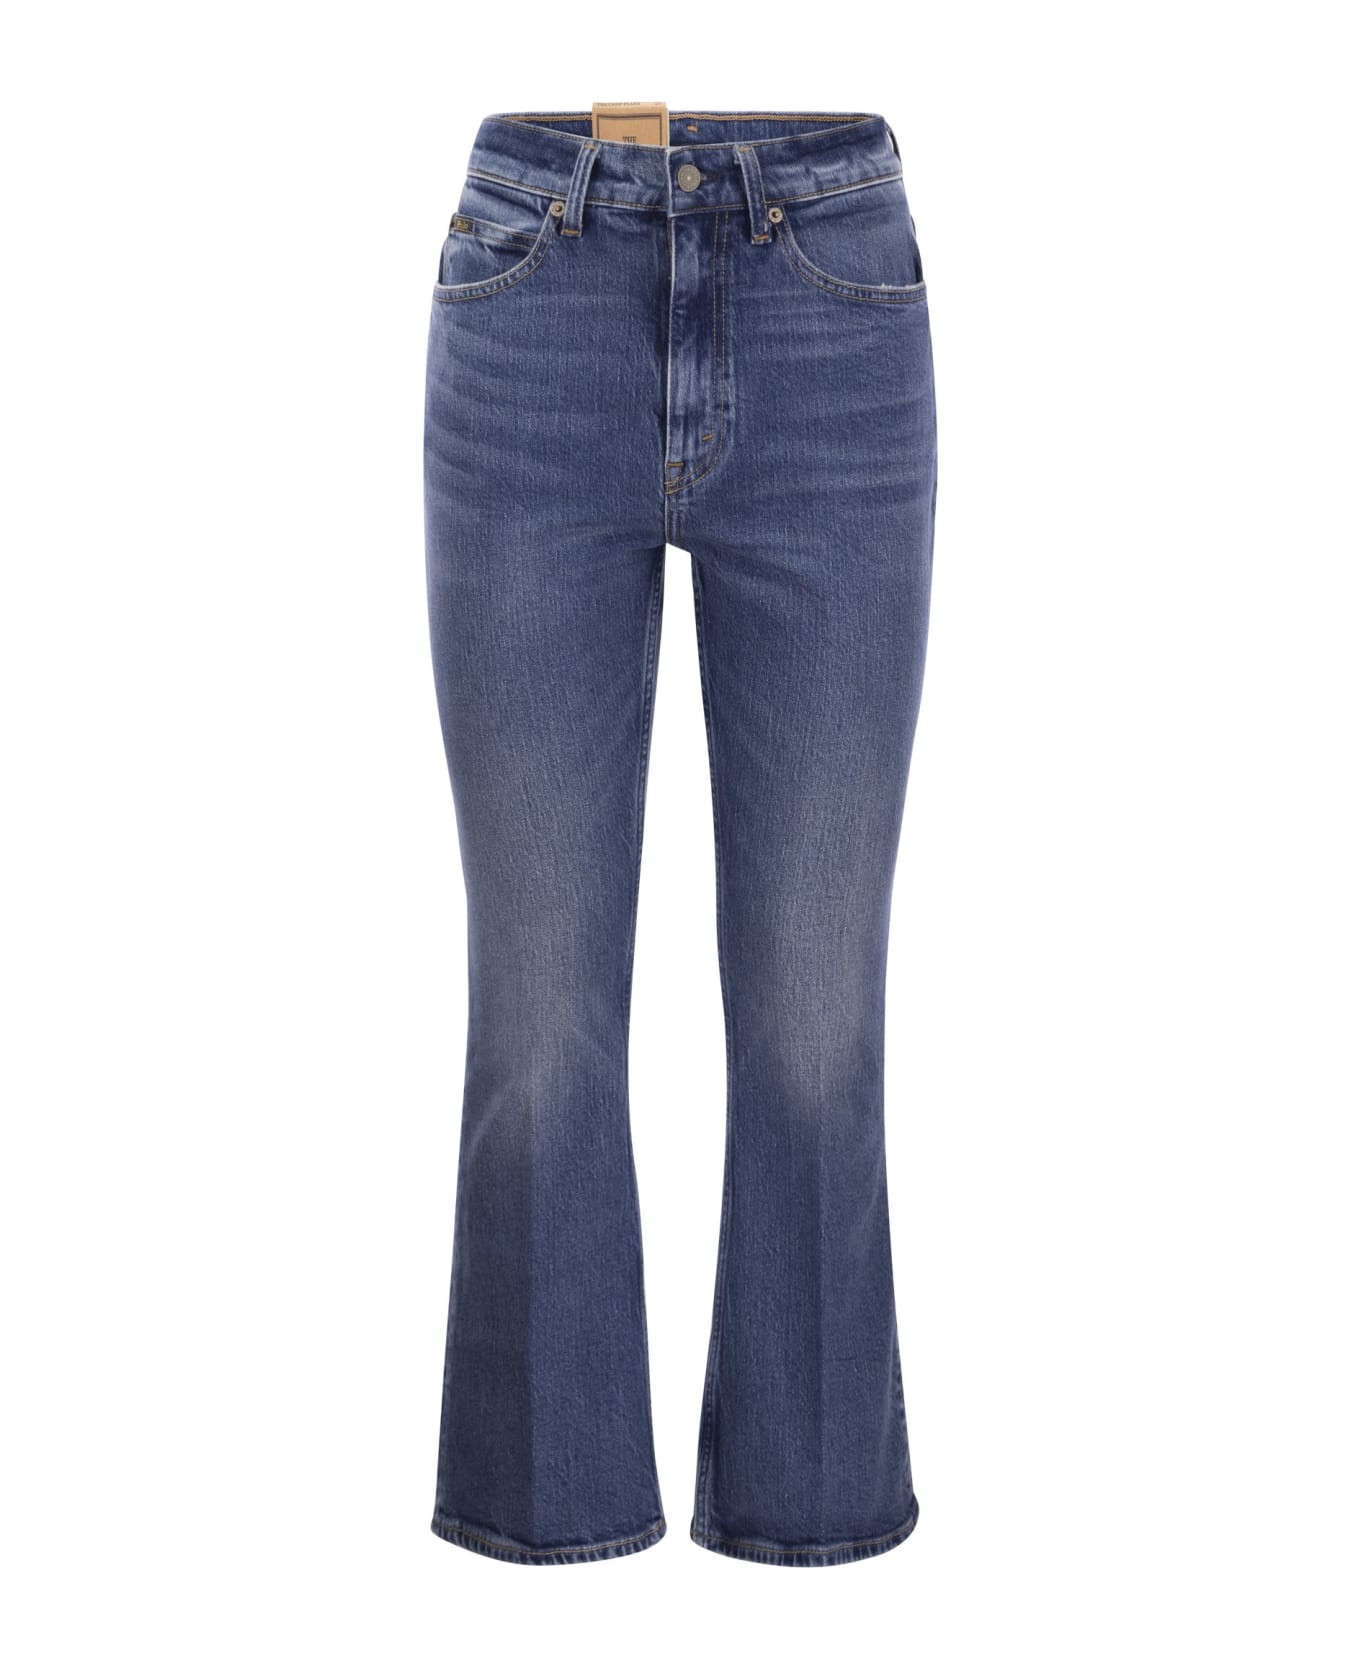 Polo Ralph Lauren Short And Flared Jeans - Medium Denim デニム